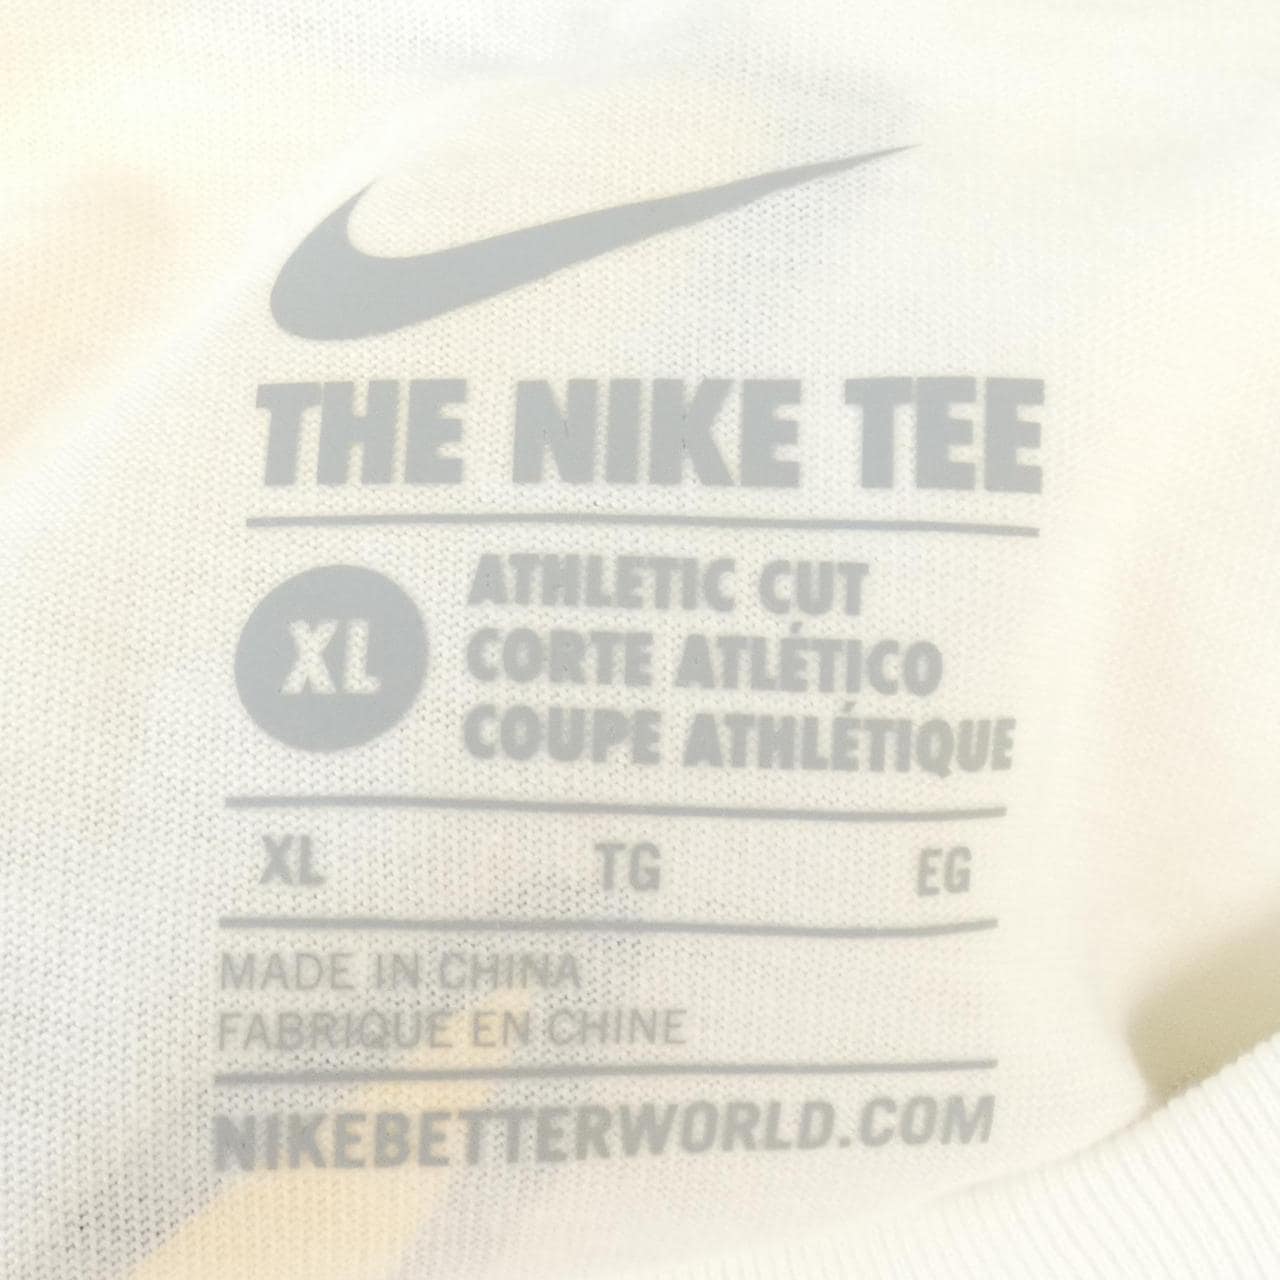 Nike NIKE T-shirt